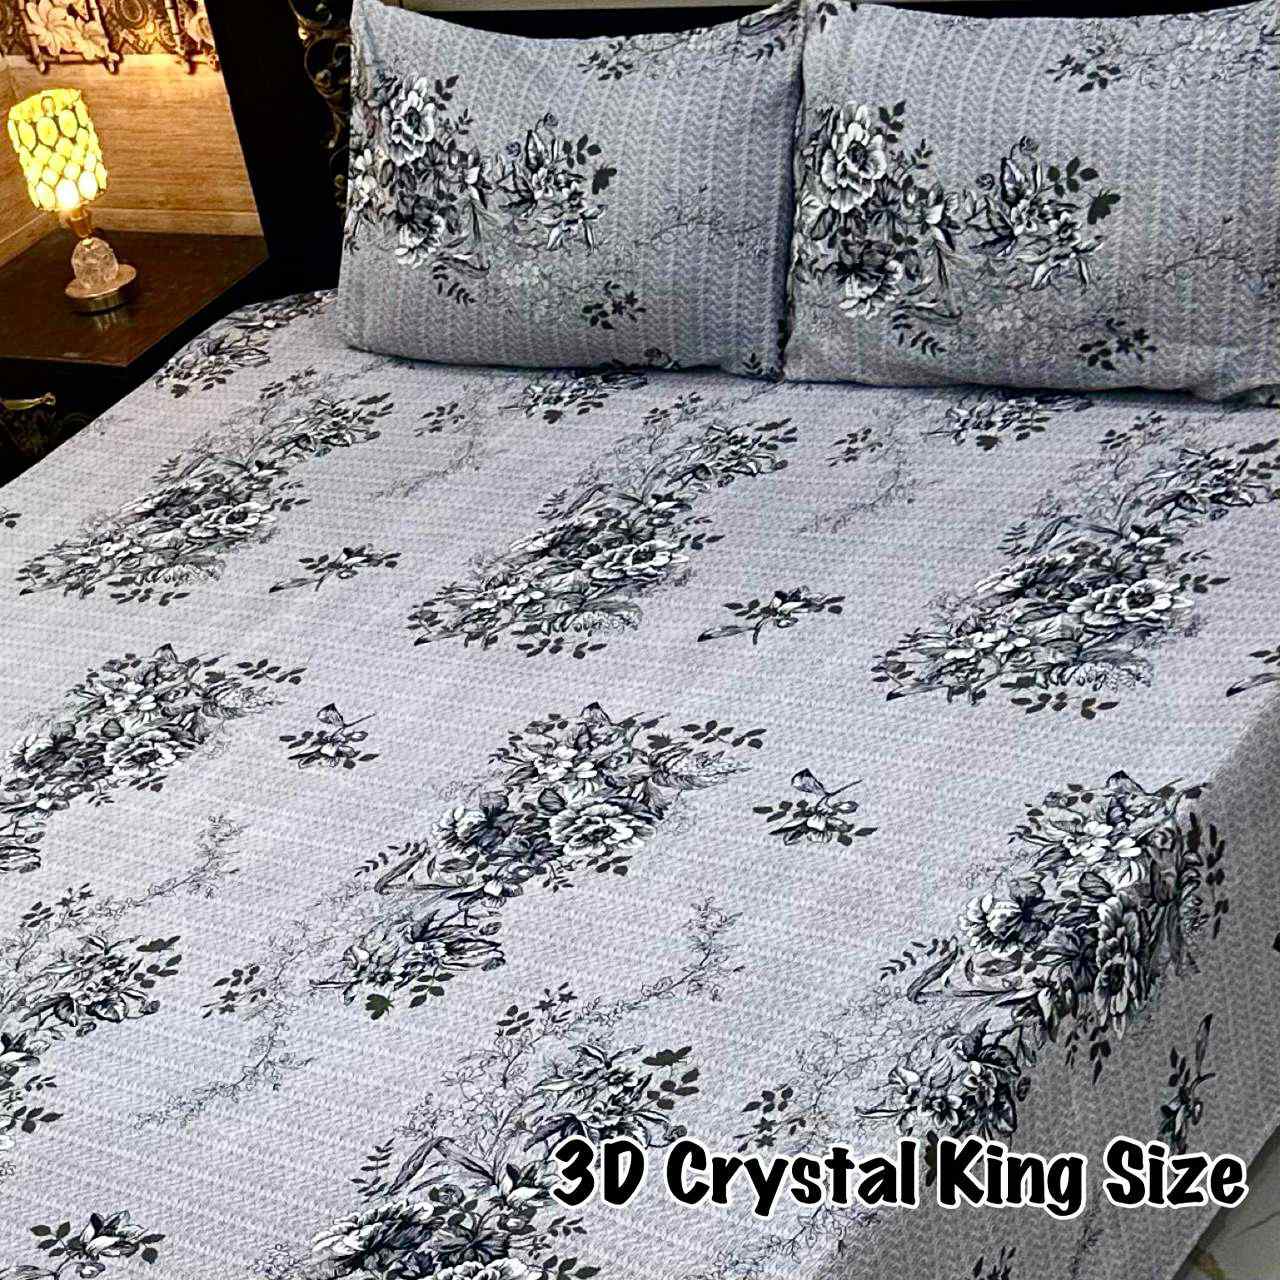 DF-CBSKS-17: DFY Bedding 3D Crystal Bed Sheet King Size